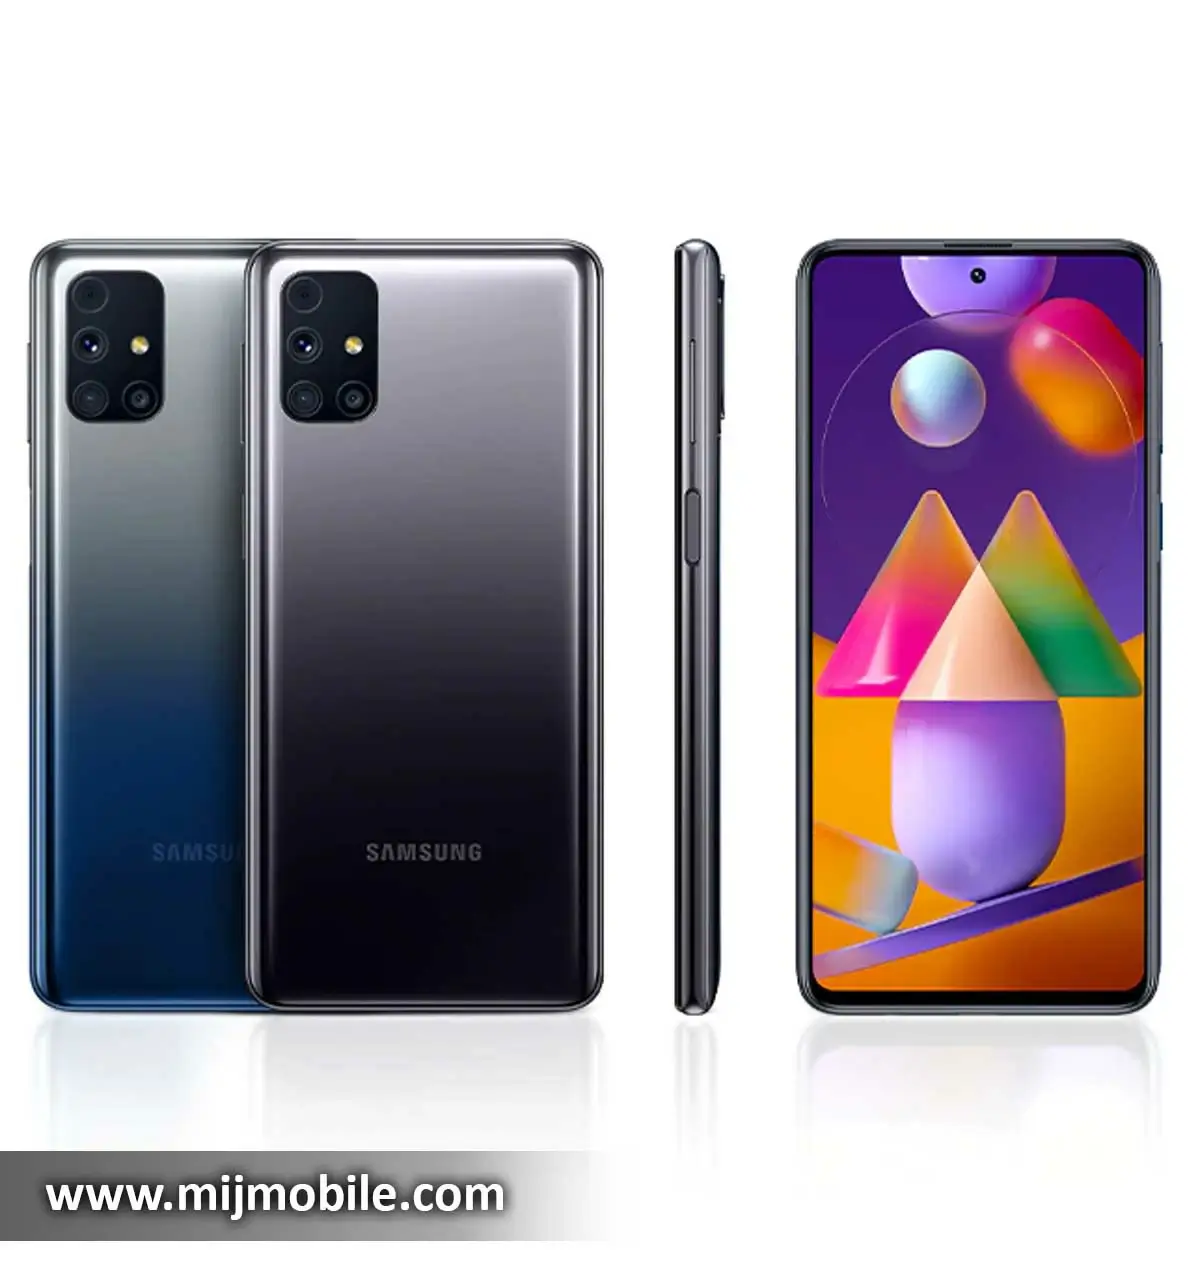 Samsung Galaxy M31s Price in Pakistan & Specifications Samsung Galaxy M31s Price in Pakistan is 47,999.